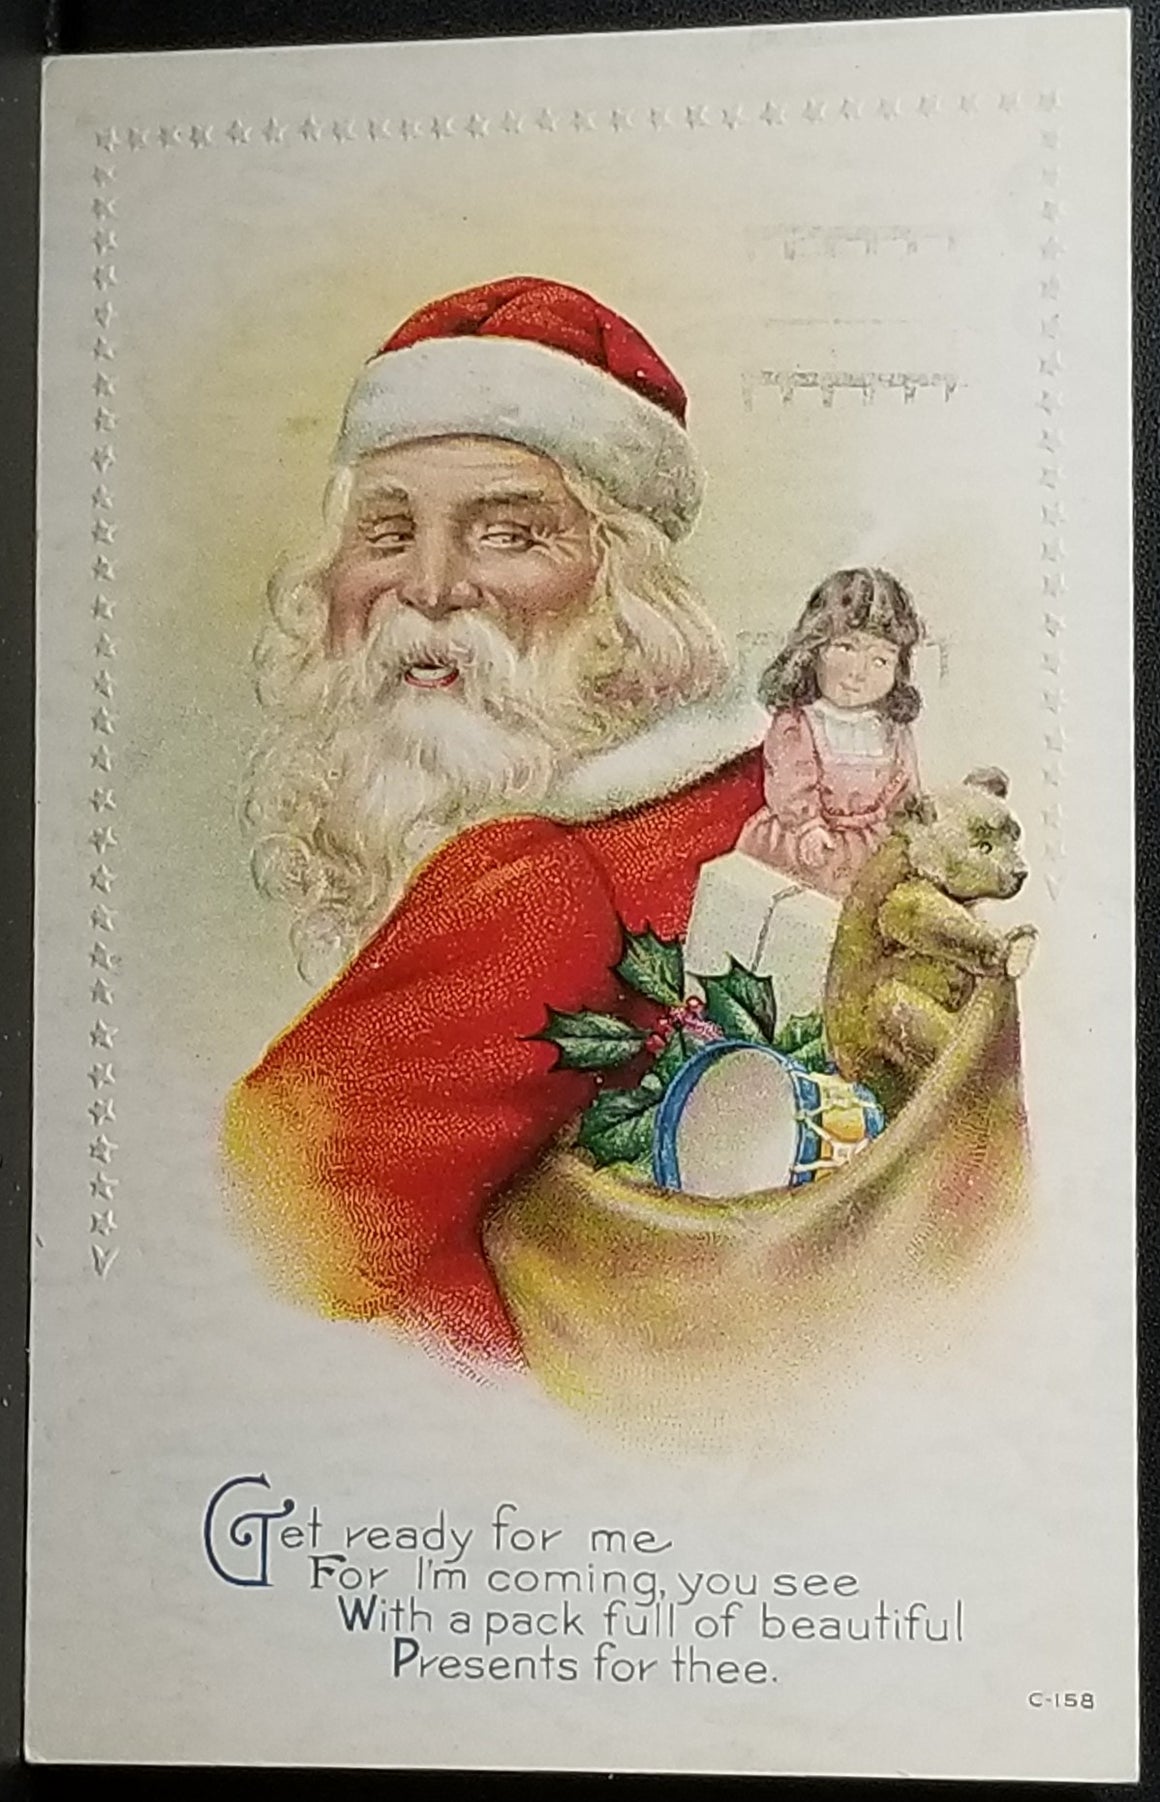 Christmas Postcard Santa Claus Profile Image Kris Kringle Smiling with Bag of Toys